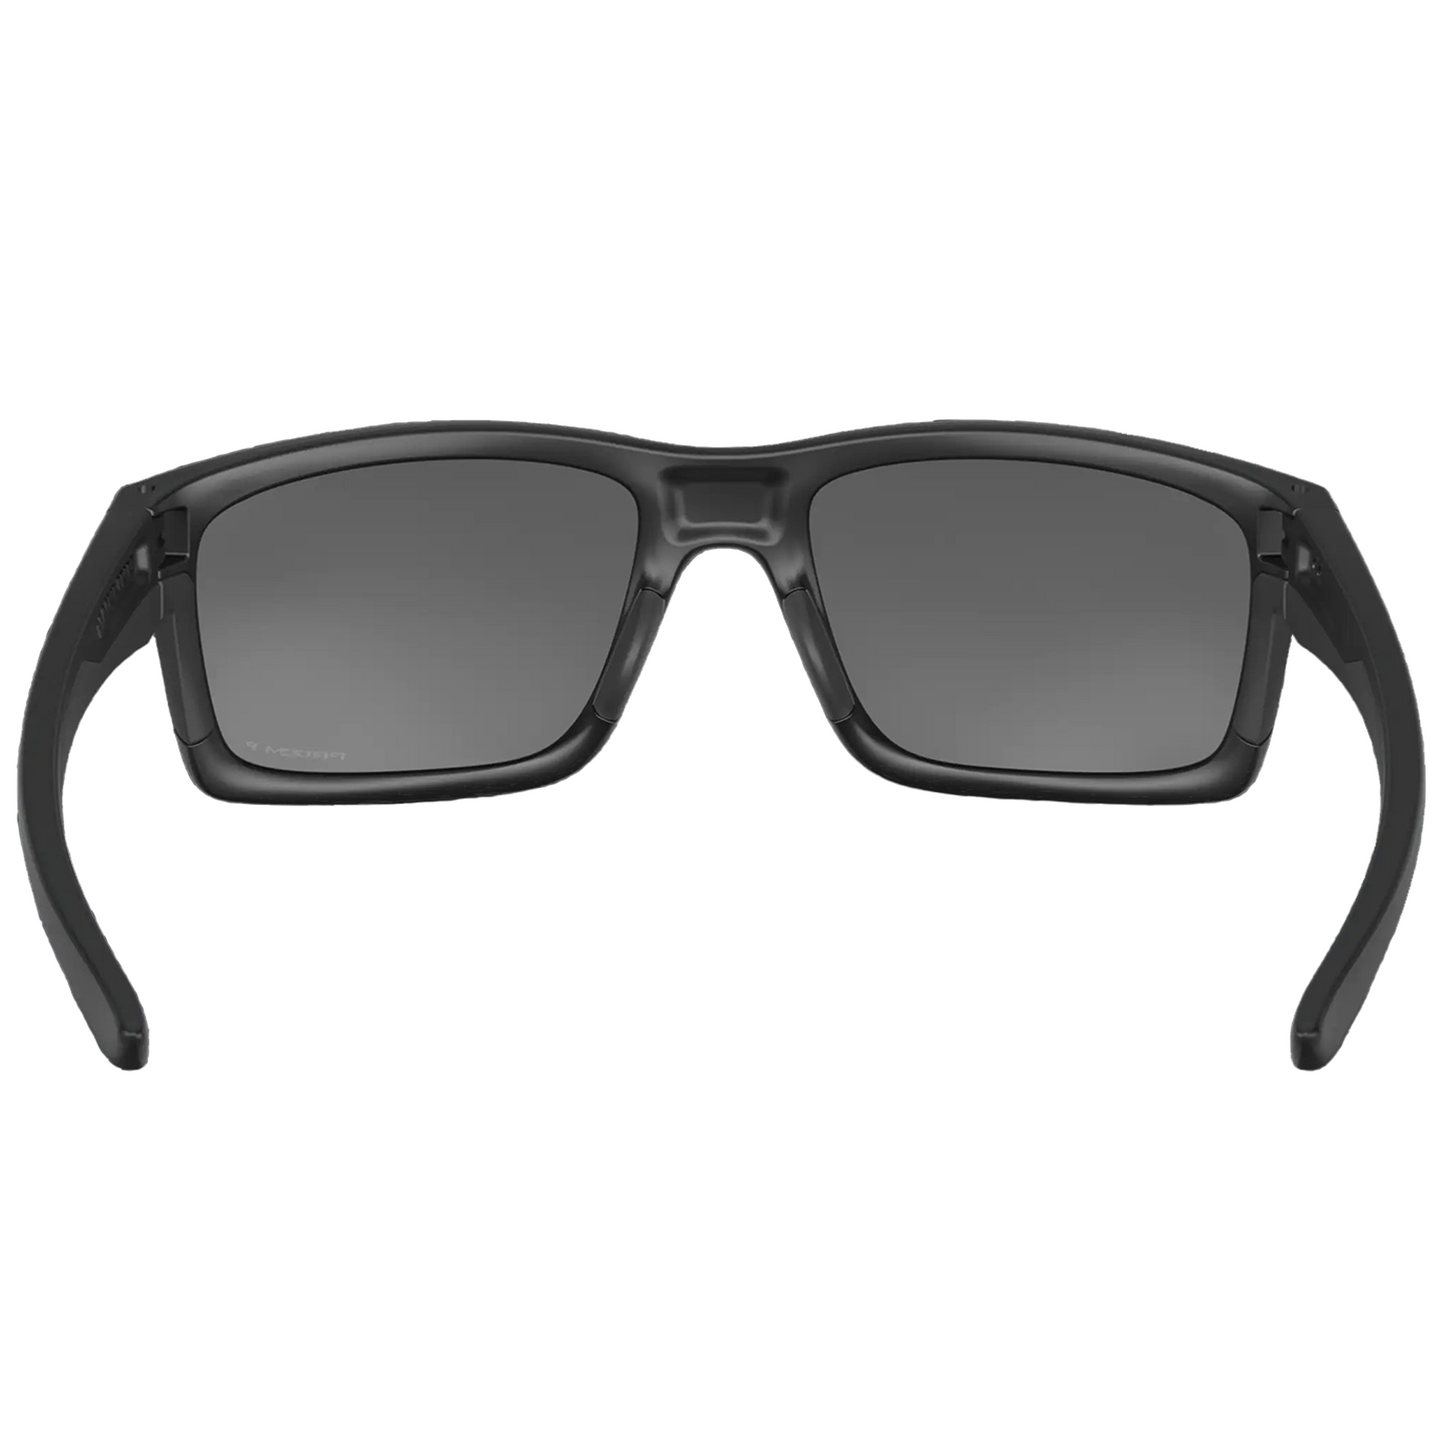 Oakley Mainlink XL Sunglasses (Matte Black) Prizm Black Polarized Lens - Free Case